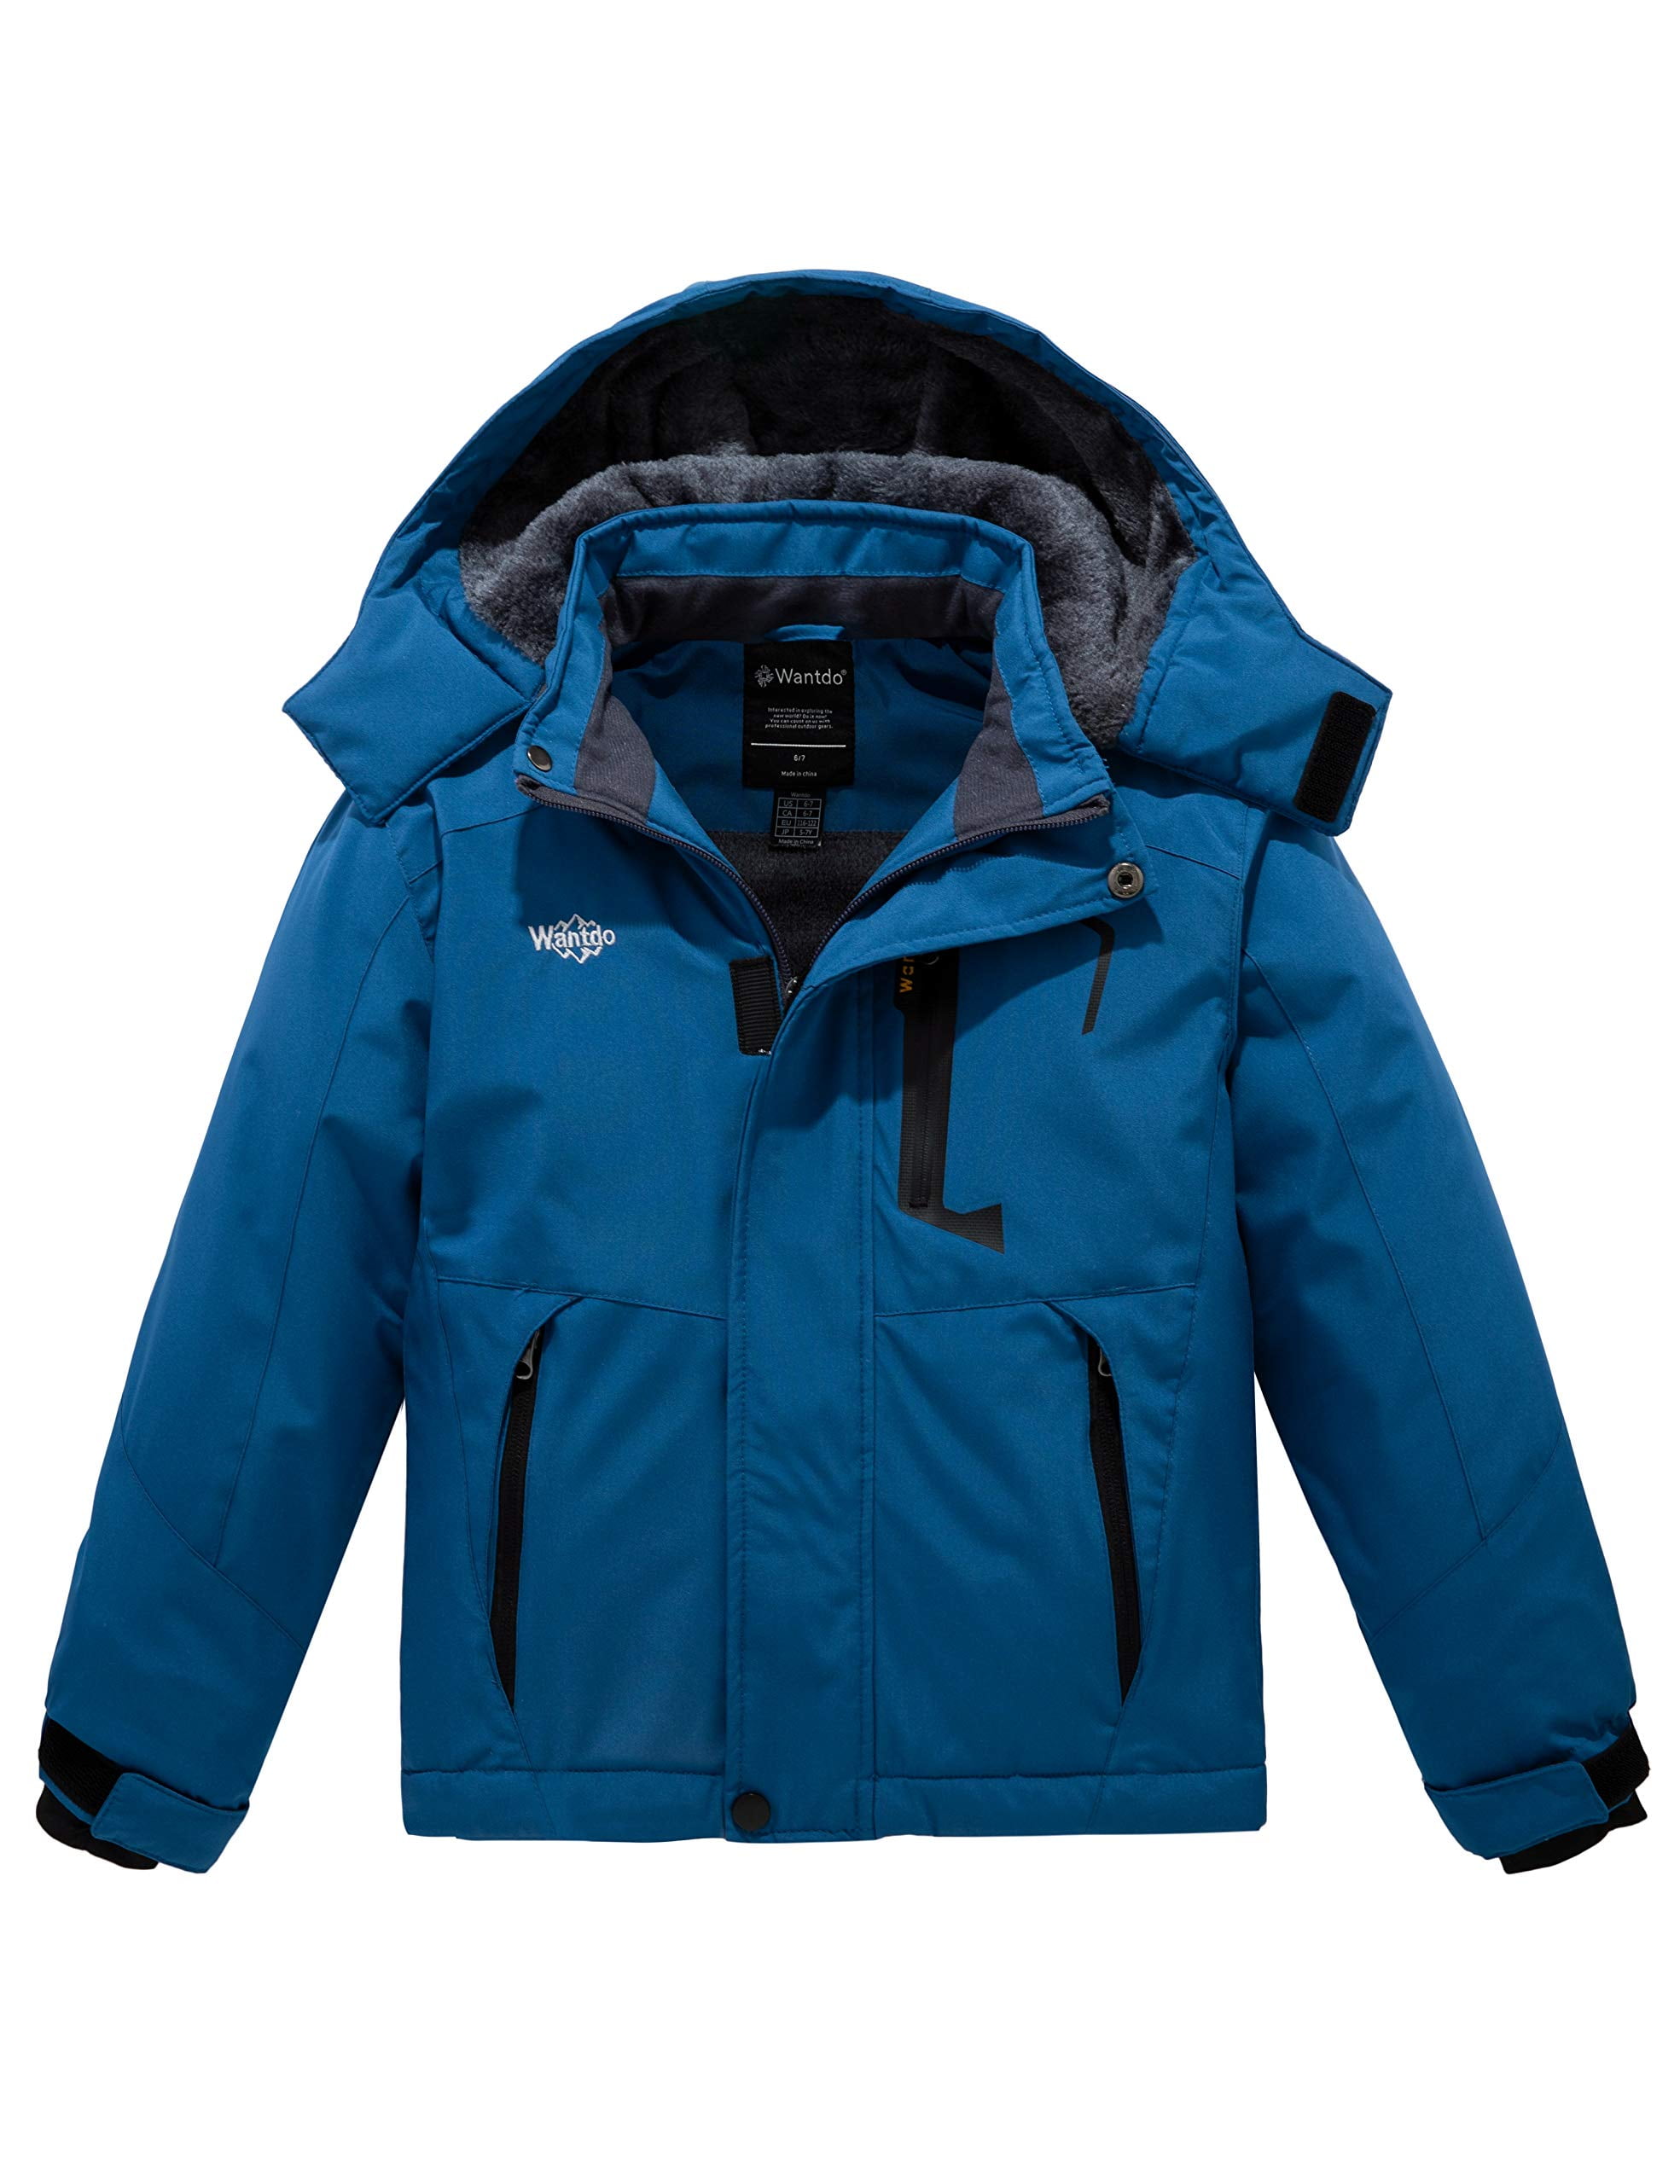 Wantdo Mens Warm Winter Coat Fleece Jacket Ski Jacket Waterproof Mountain Snowboarding Coat Outdoor Windbreaker